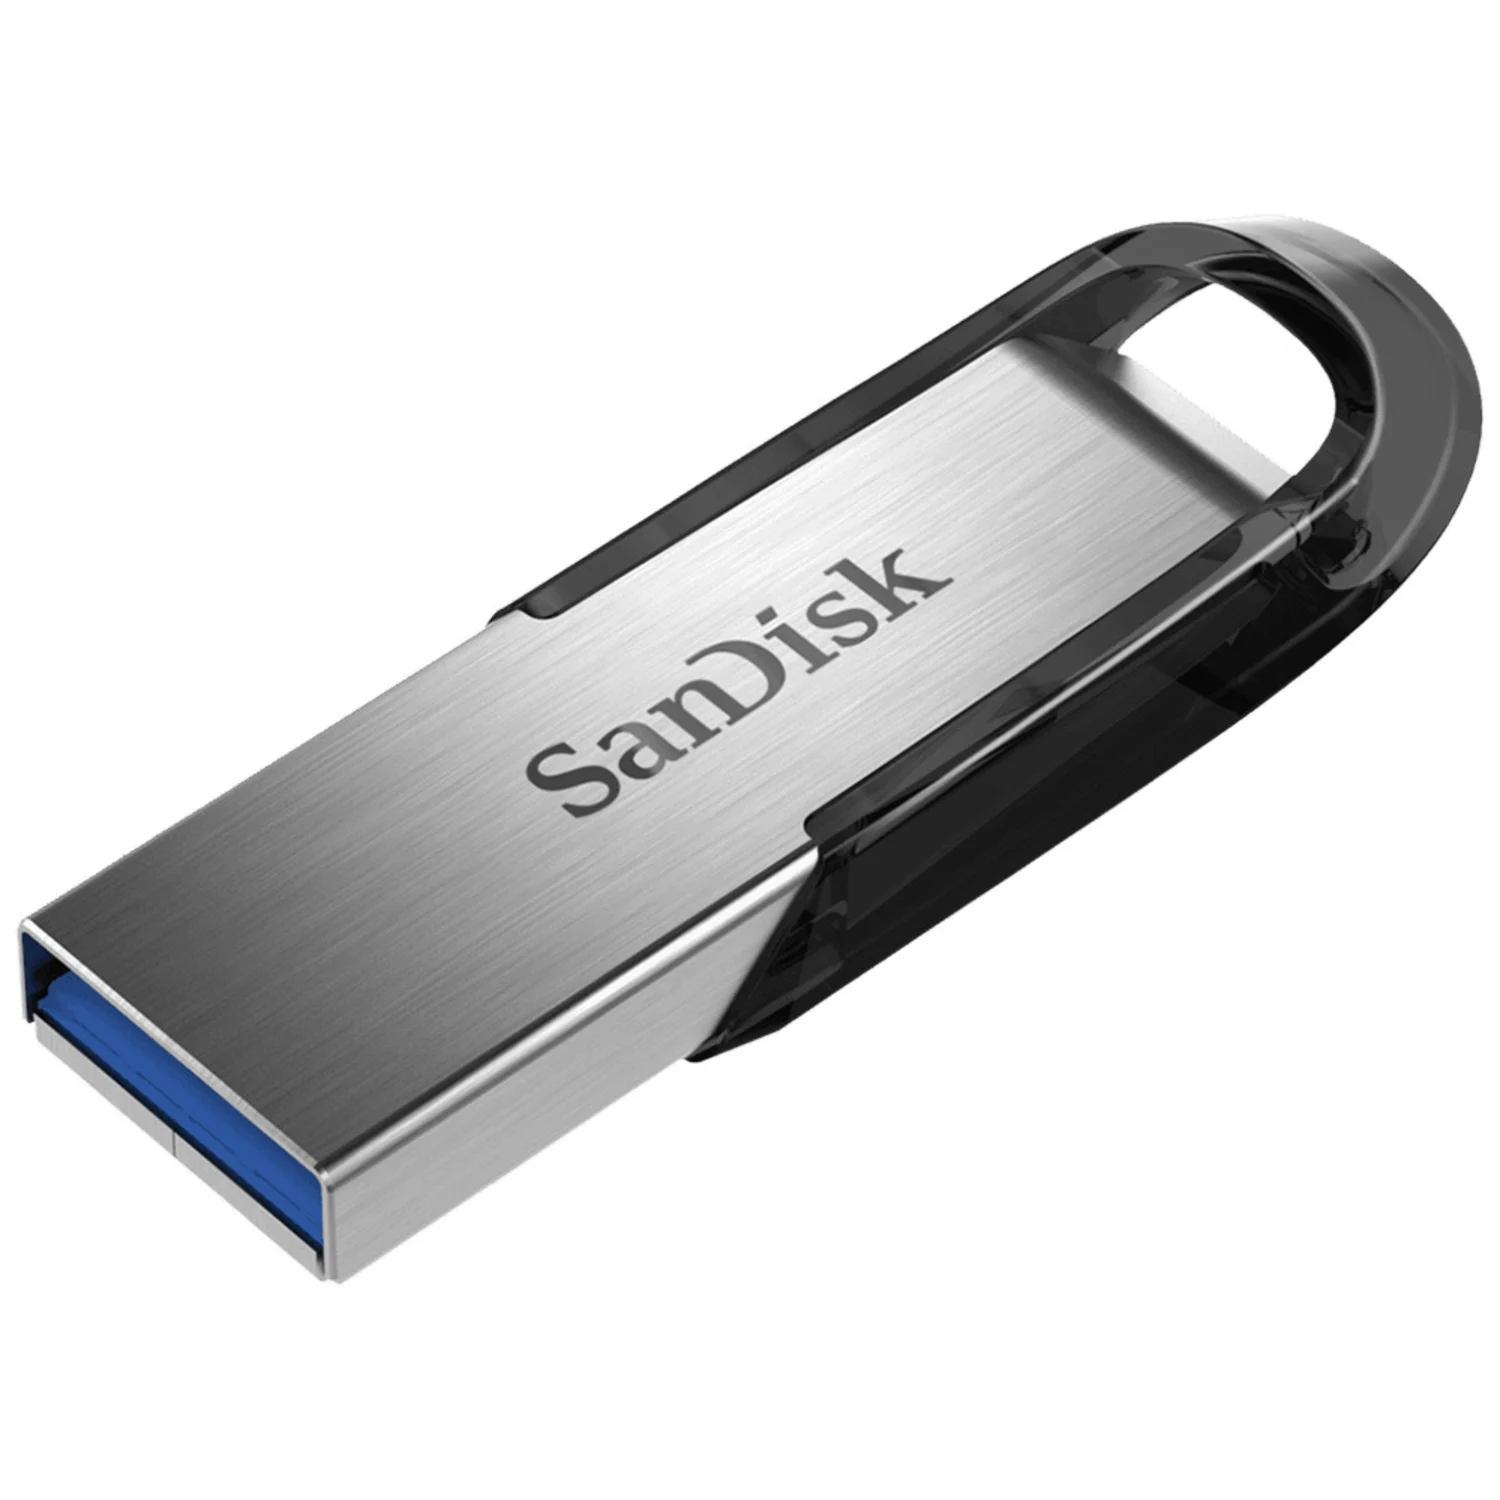 Pendrive Sandisk 16GB Z73 Ultra Flash Drive / USB 3.0 - Prata (SDCZ73-016G-G46)